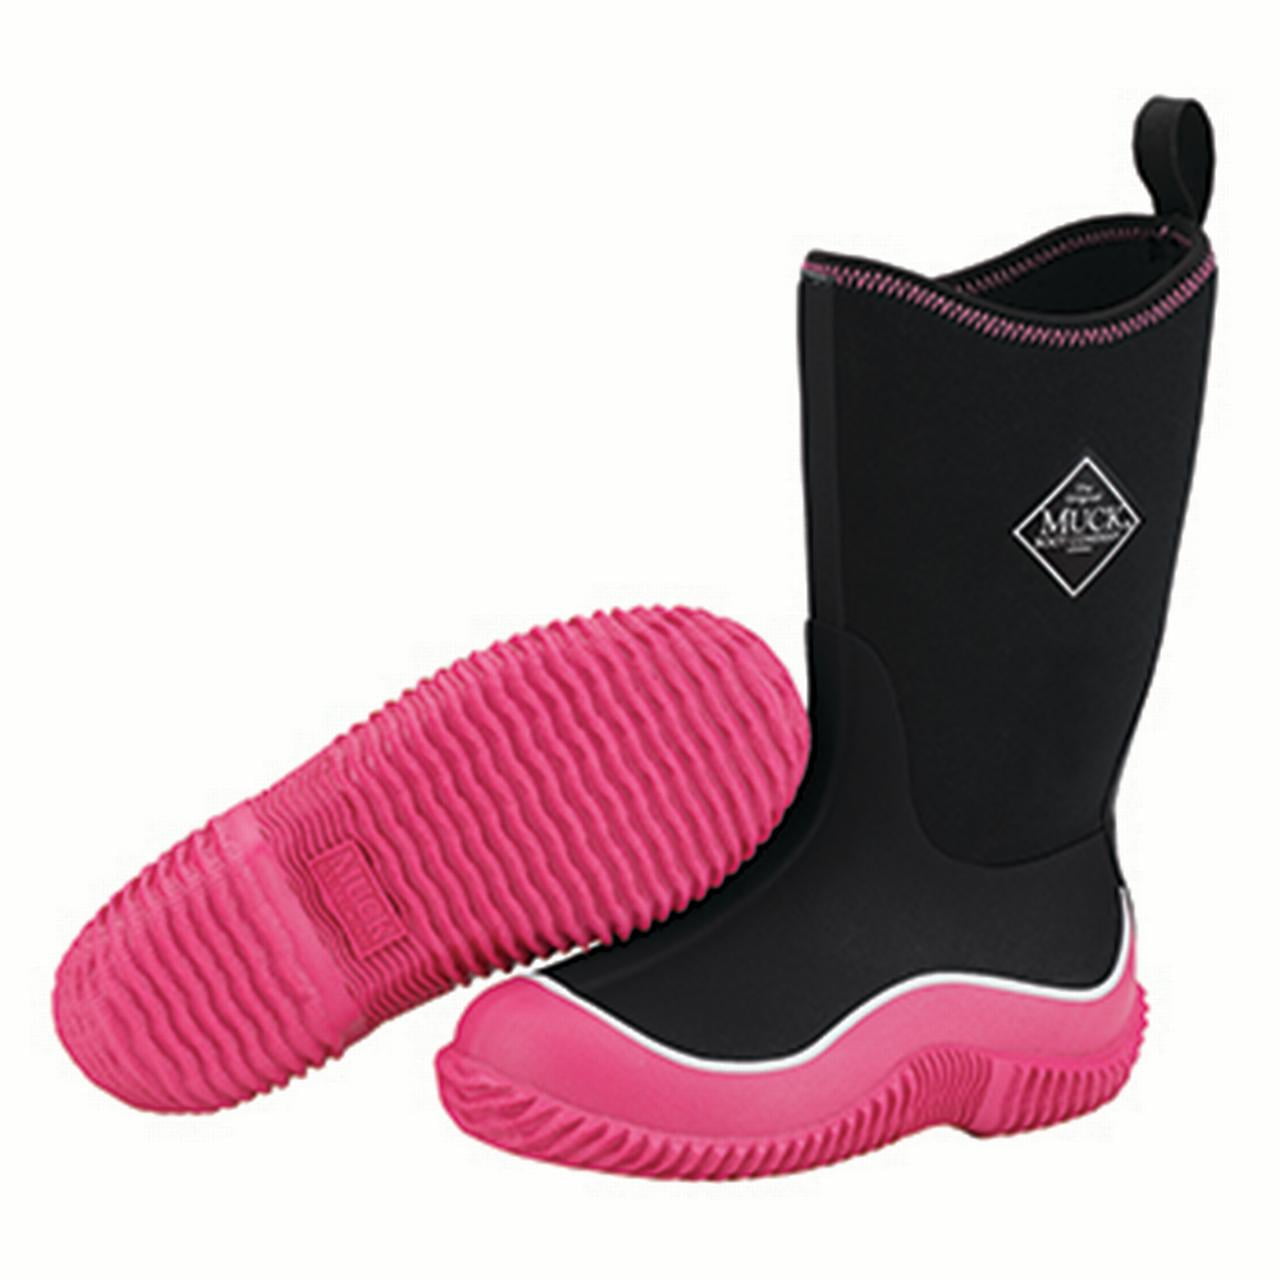 Muck Boot Company Hale Pink Polka Dot Waterproof Big Kids All Season Boots Sz 7 